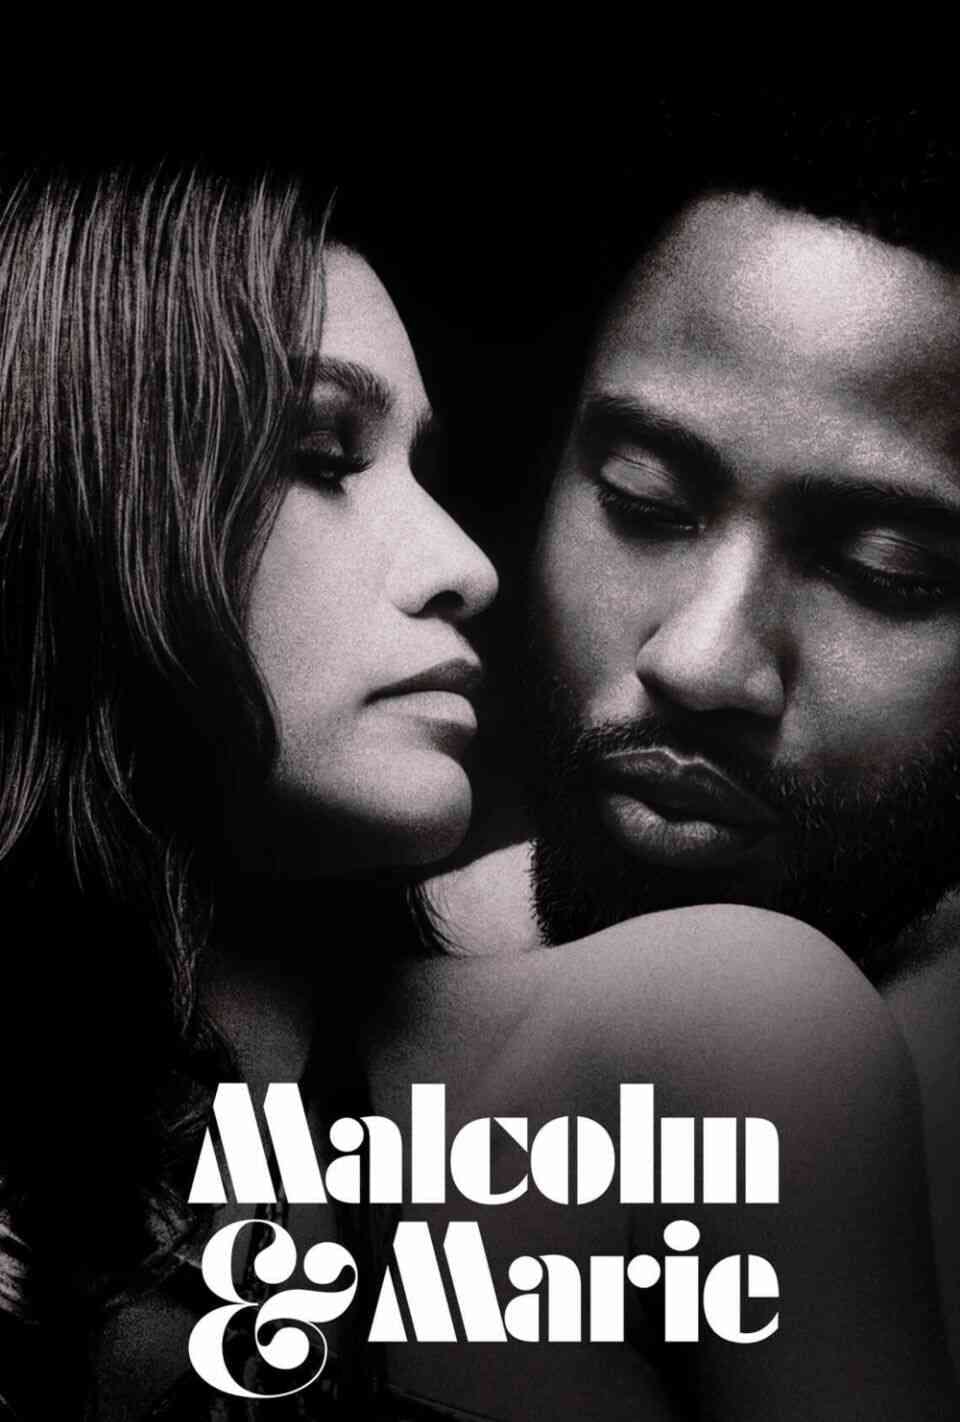 Read Malcolm & Marie screenplay.